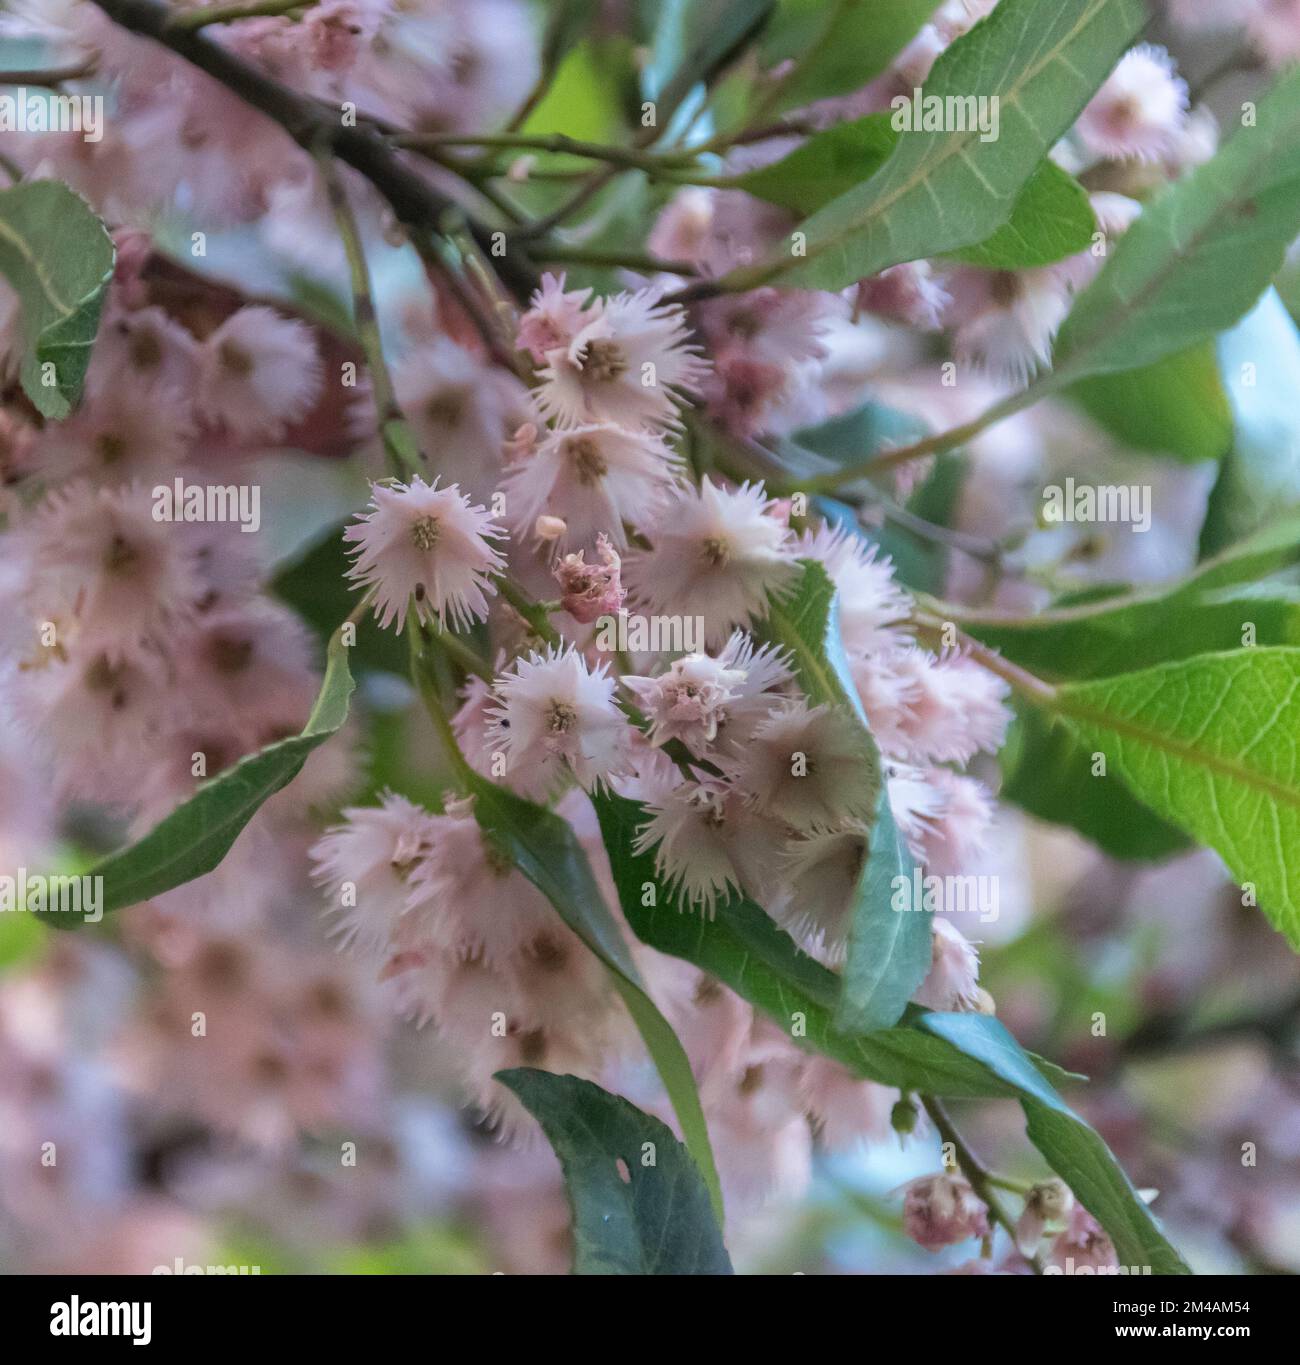 Mass of tiny pink flowers of Australian Blueberry Ash tree, Elaeocarpus reticulatus, in springtime, Queensland native garden. Stock Photo